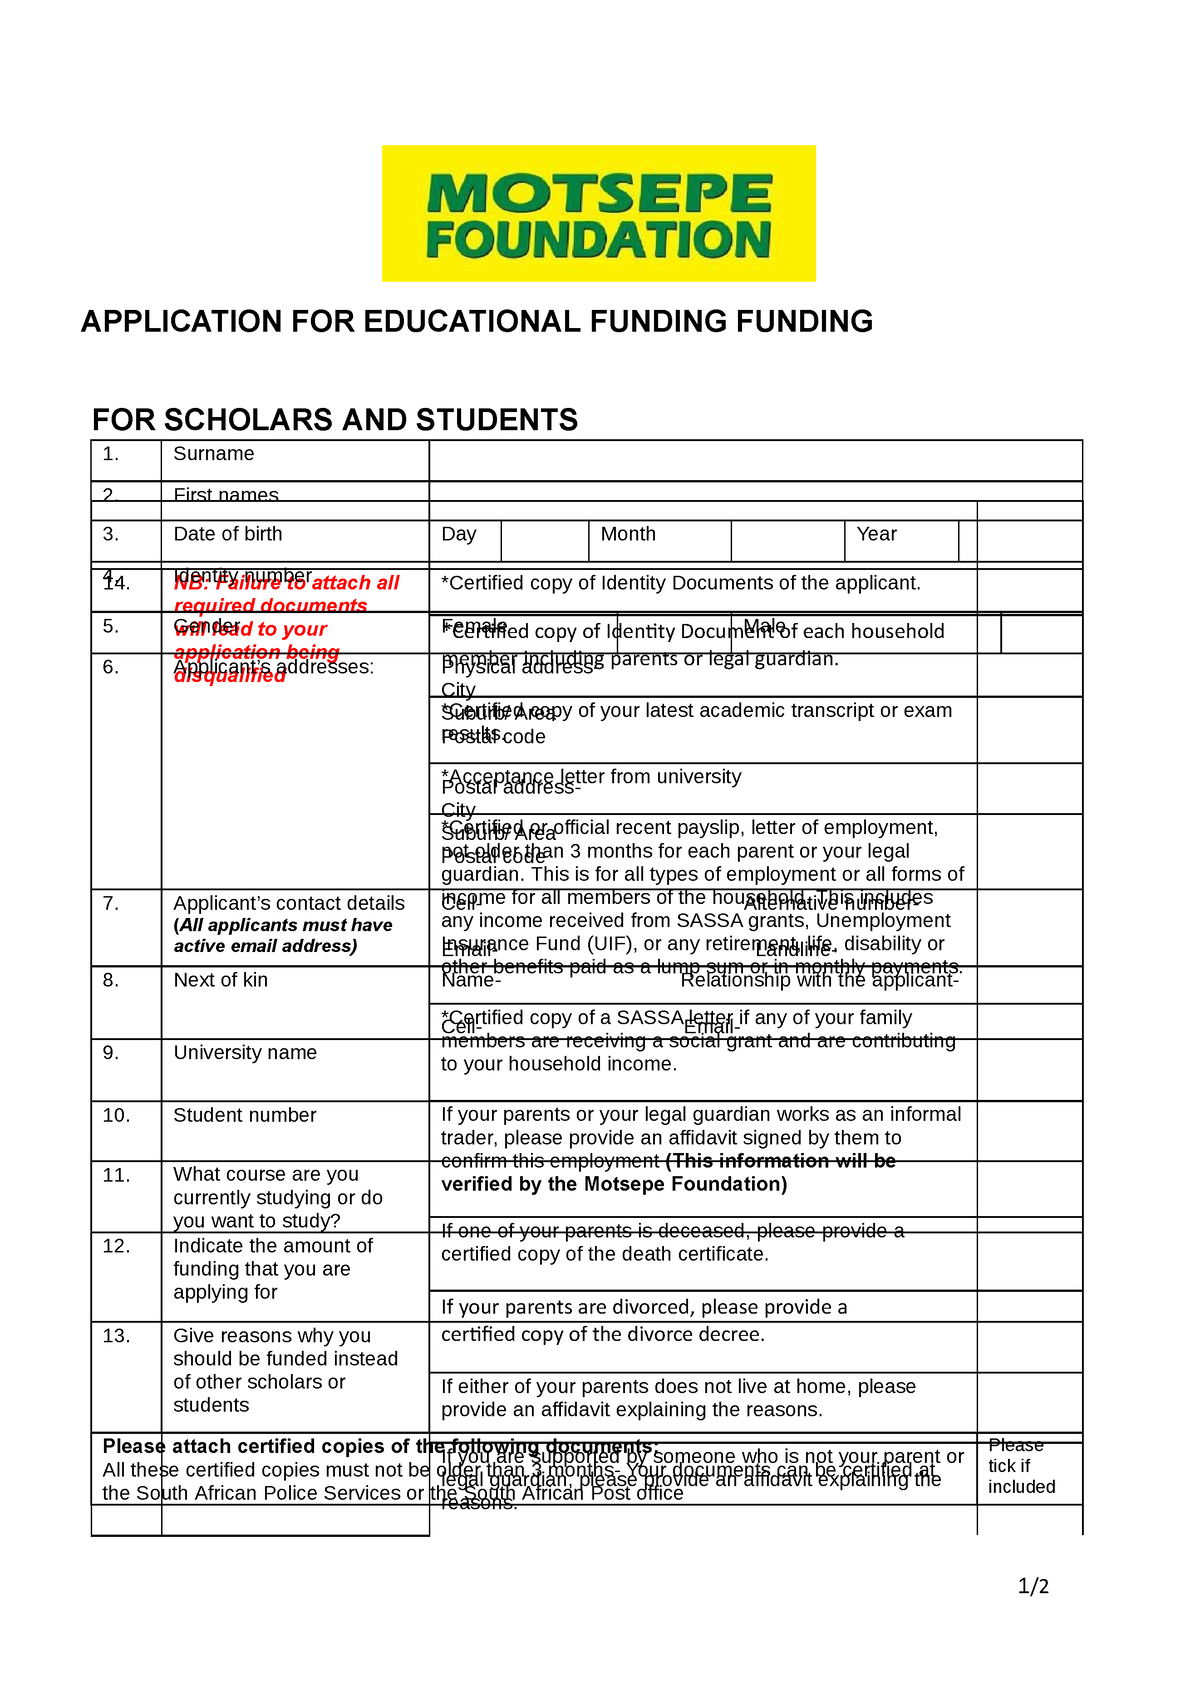 Motsepe Foundation Bursary Application Form 1 Application For Educational Funding Funding 6332